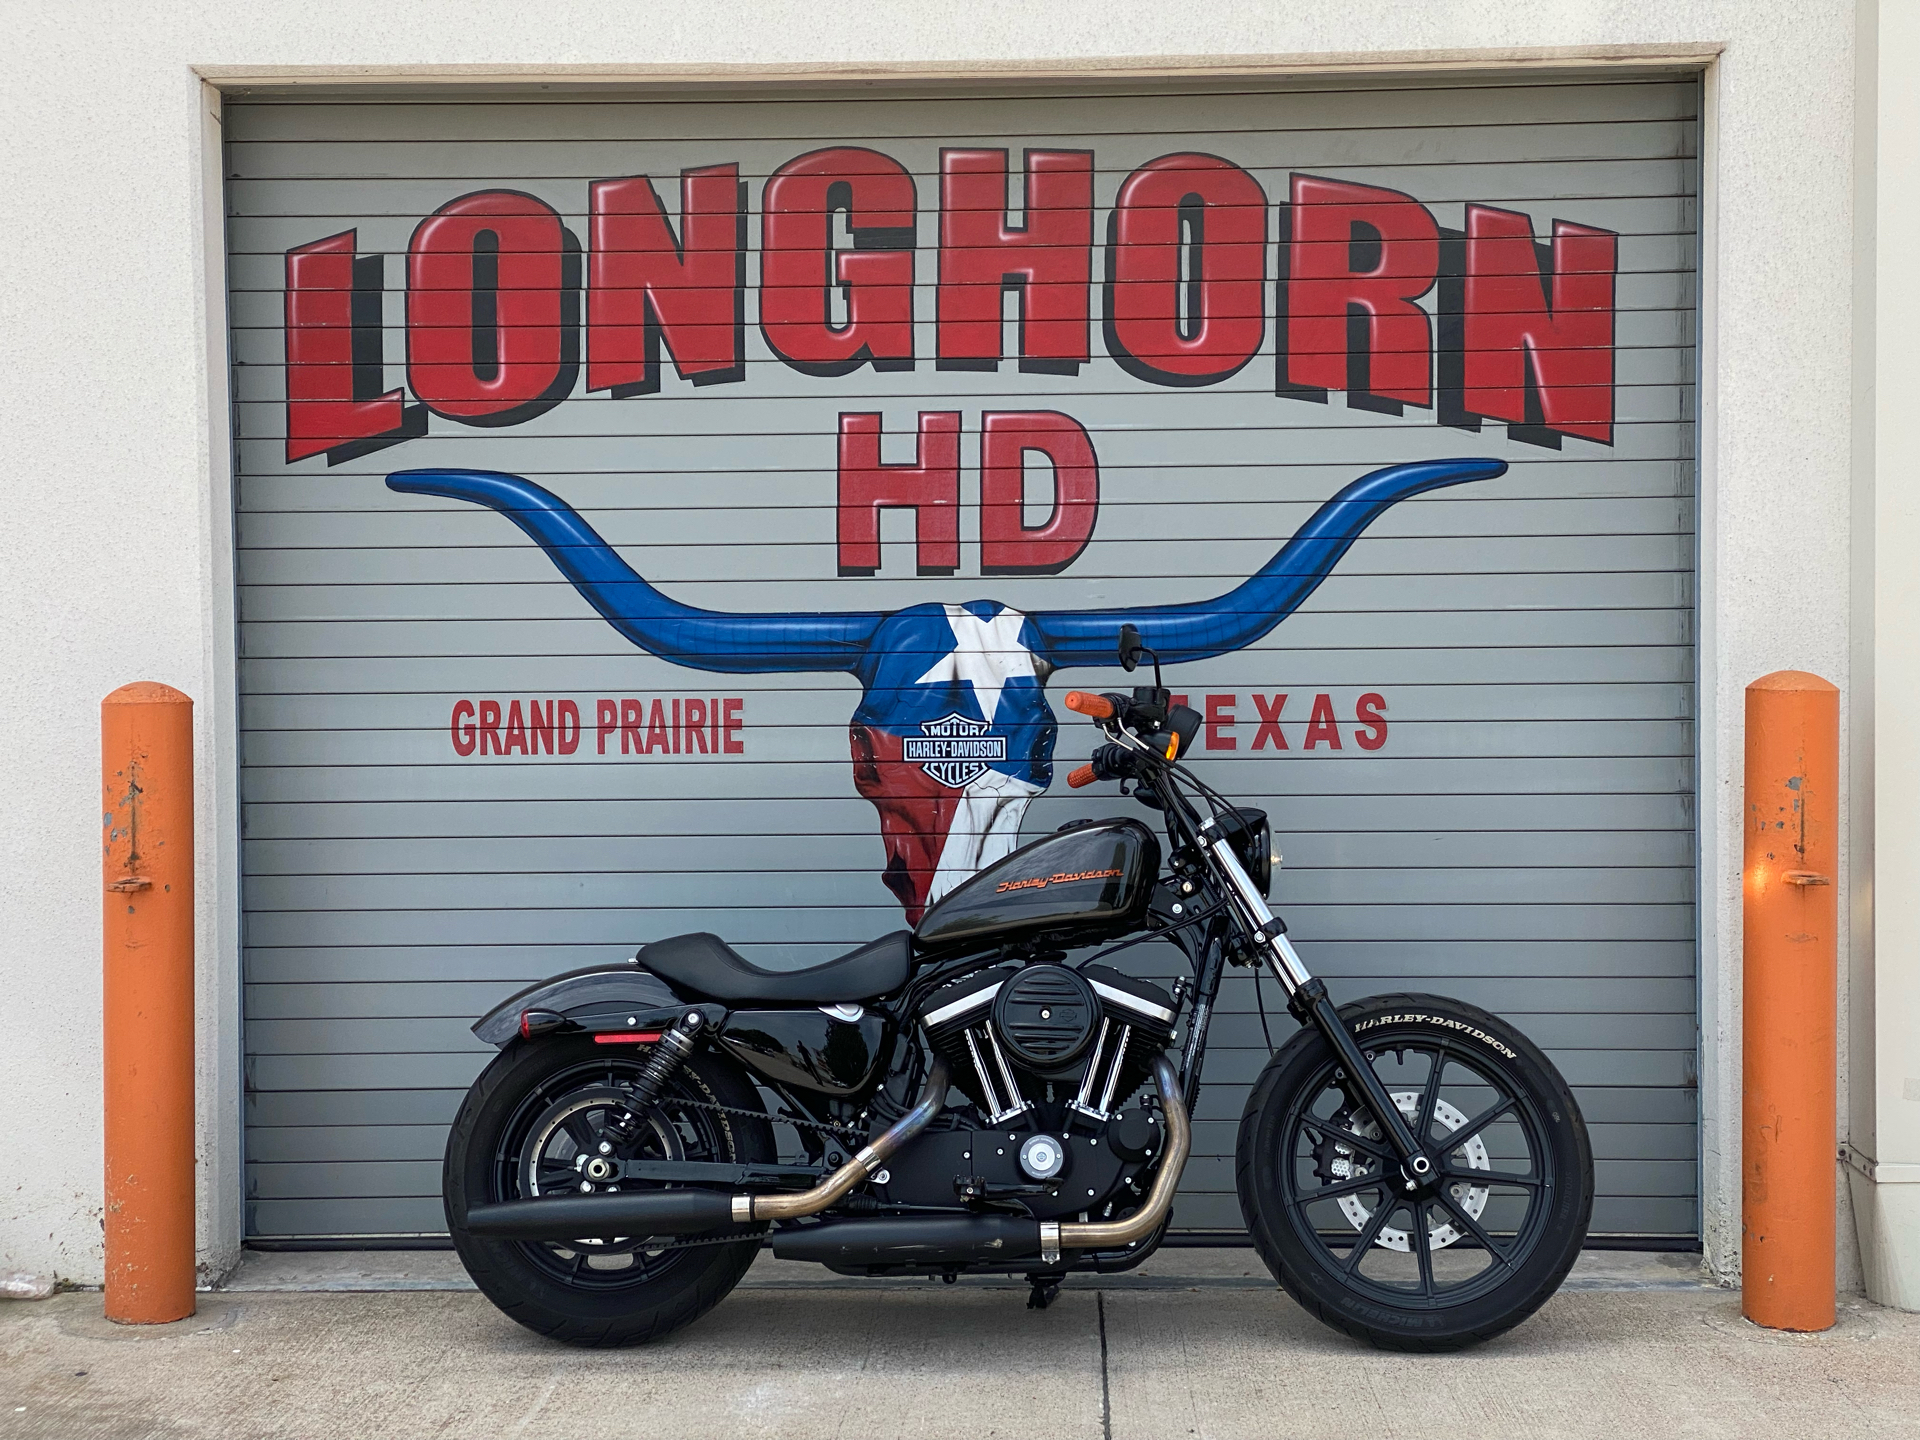 2019 Harley-Davidson Iron 883™ in Grand Prairie, Texas - Photo 1